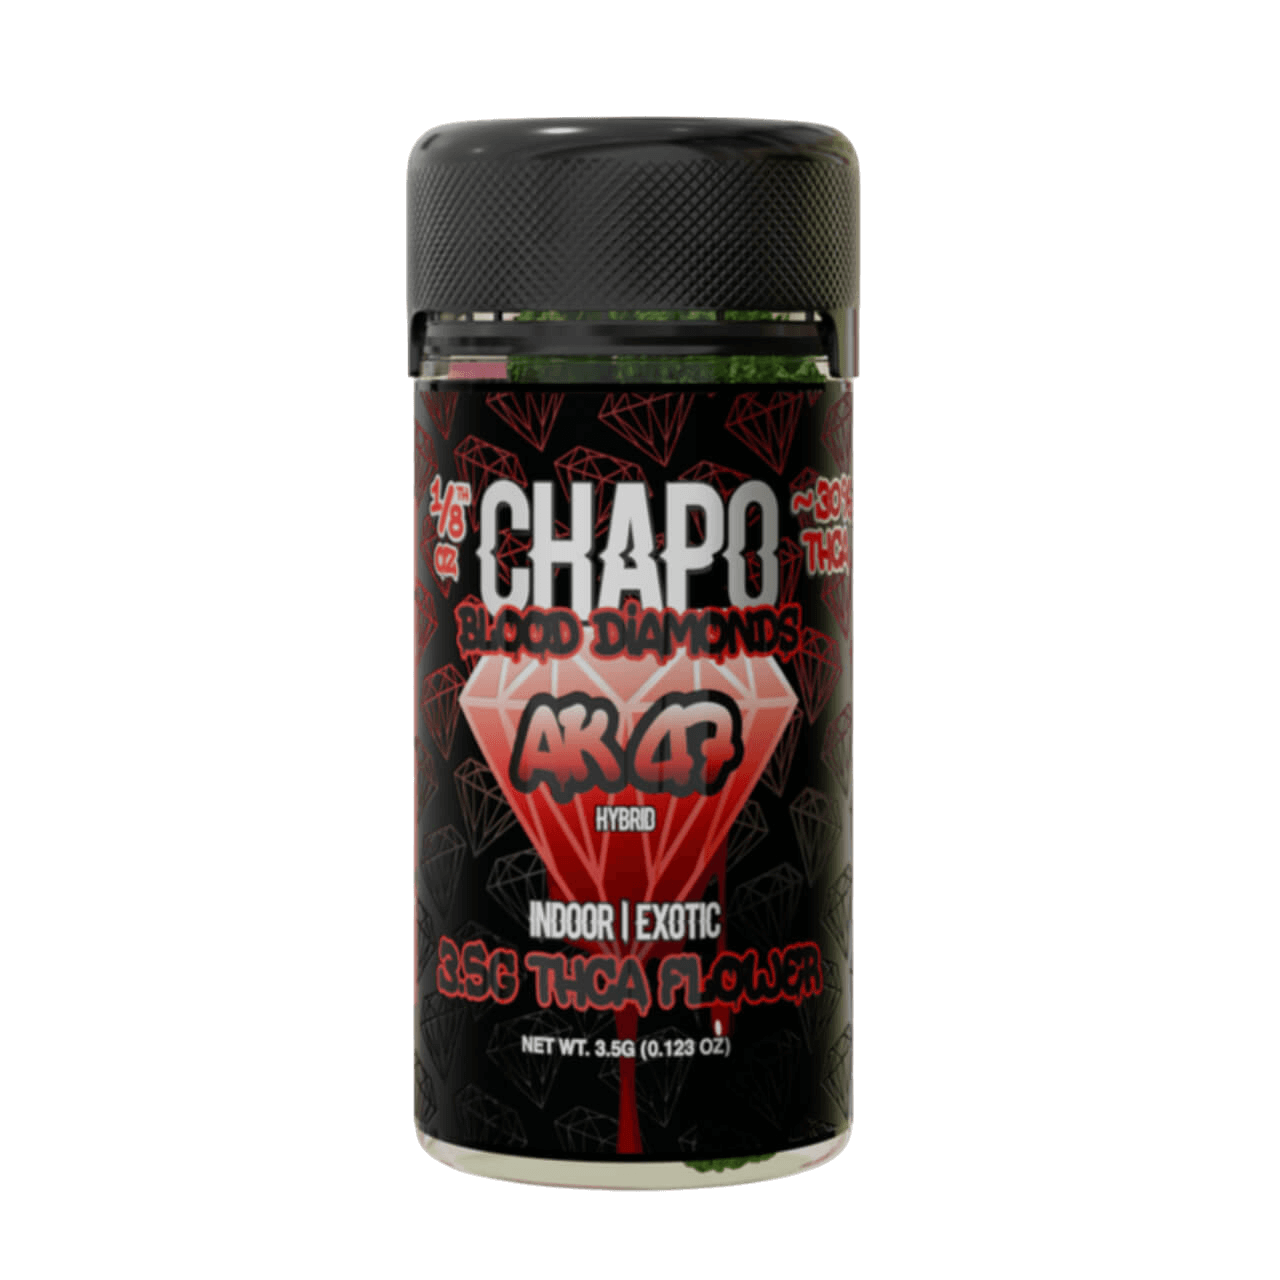 Chapo Blood Diamonds THC-A Exotic Indoor Flower - 3.5G